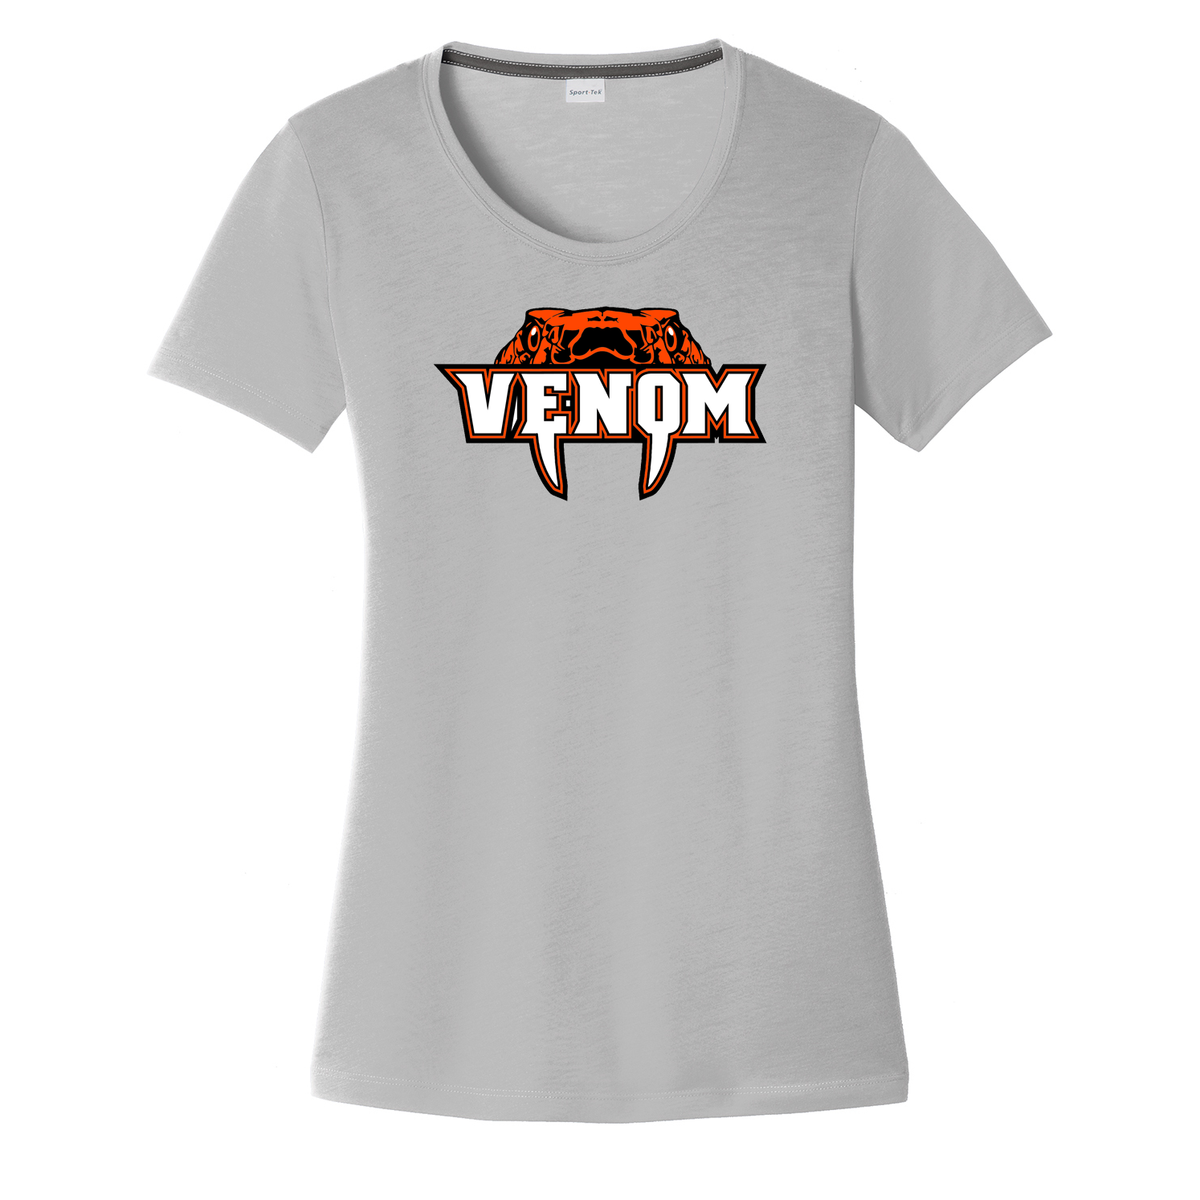 Venom Baseball  Women's CottonTouch Performance T-Shirt